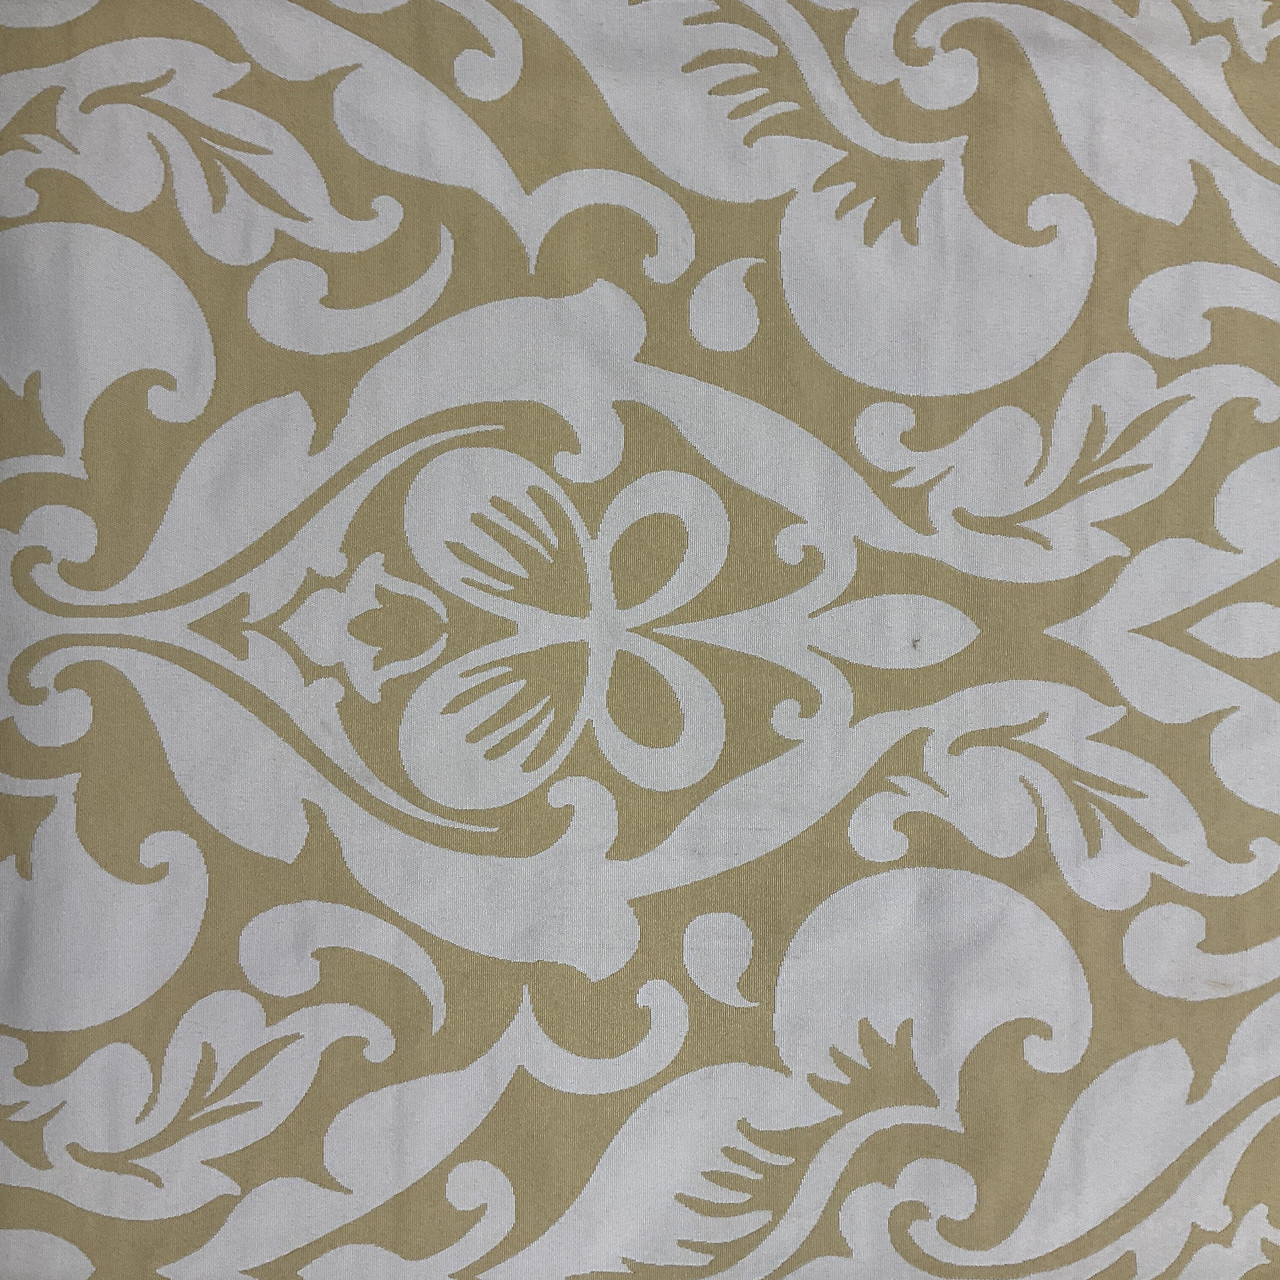 Damask Chenille Fabric: Upholstery & Drapery Fabric, 58 Wide